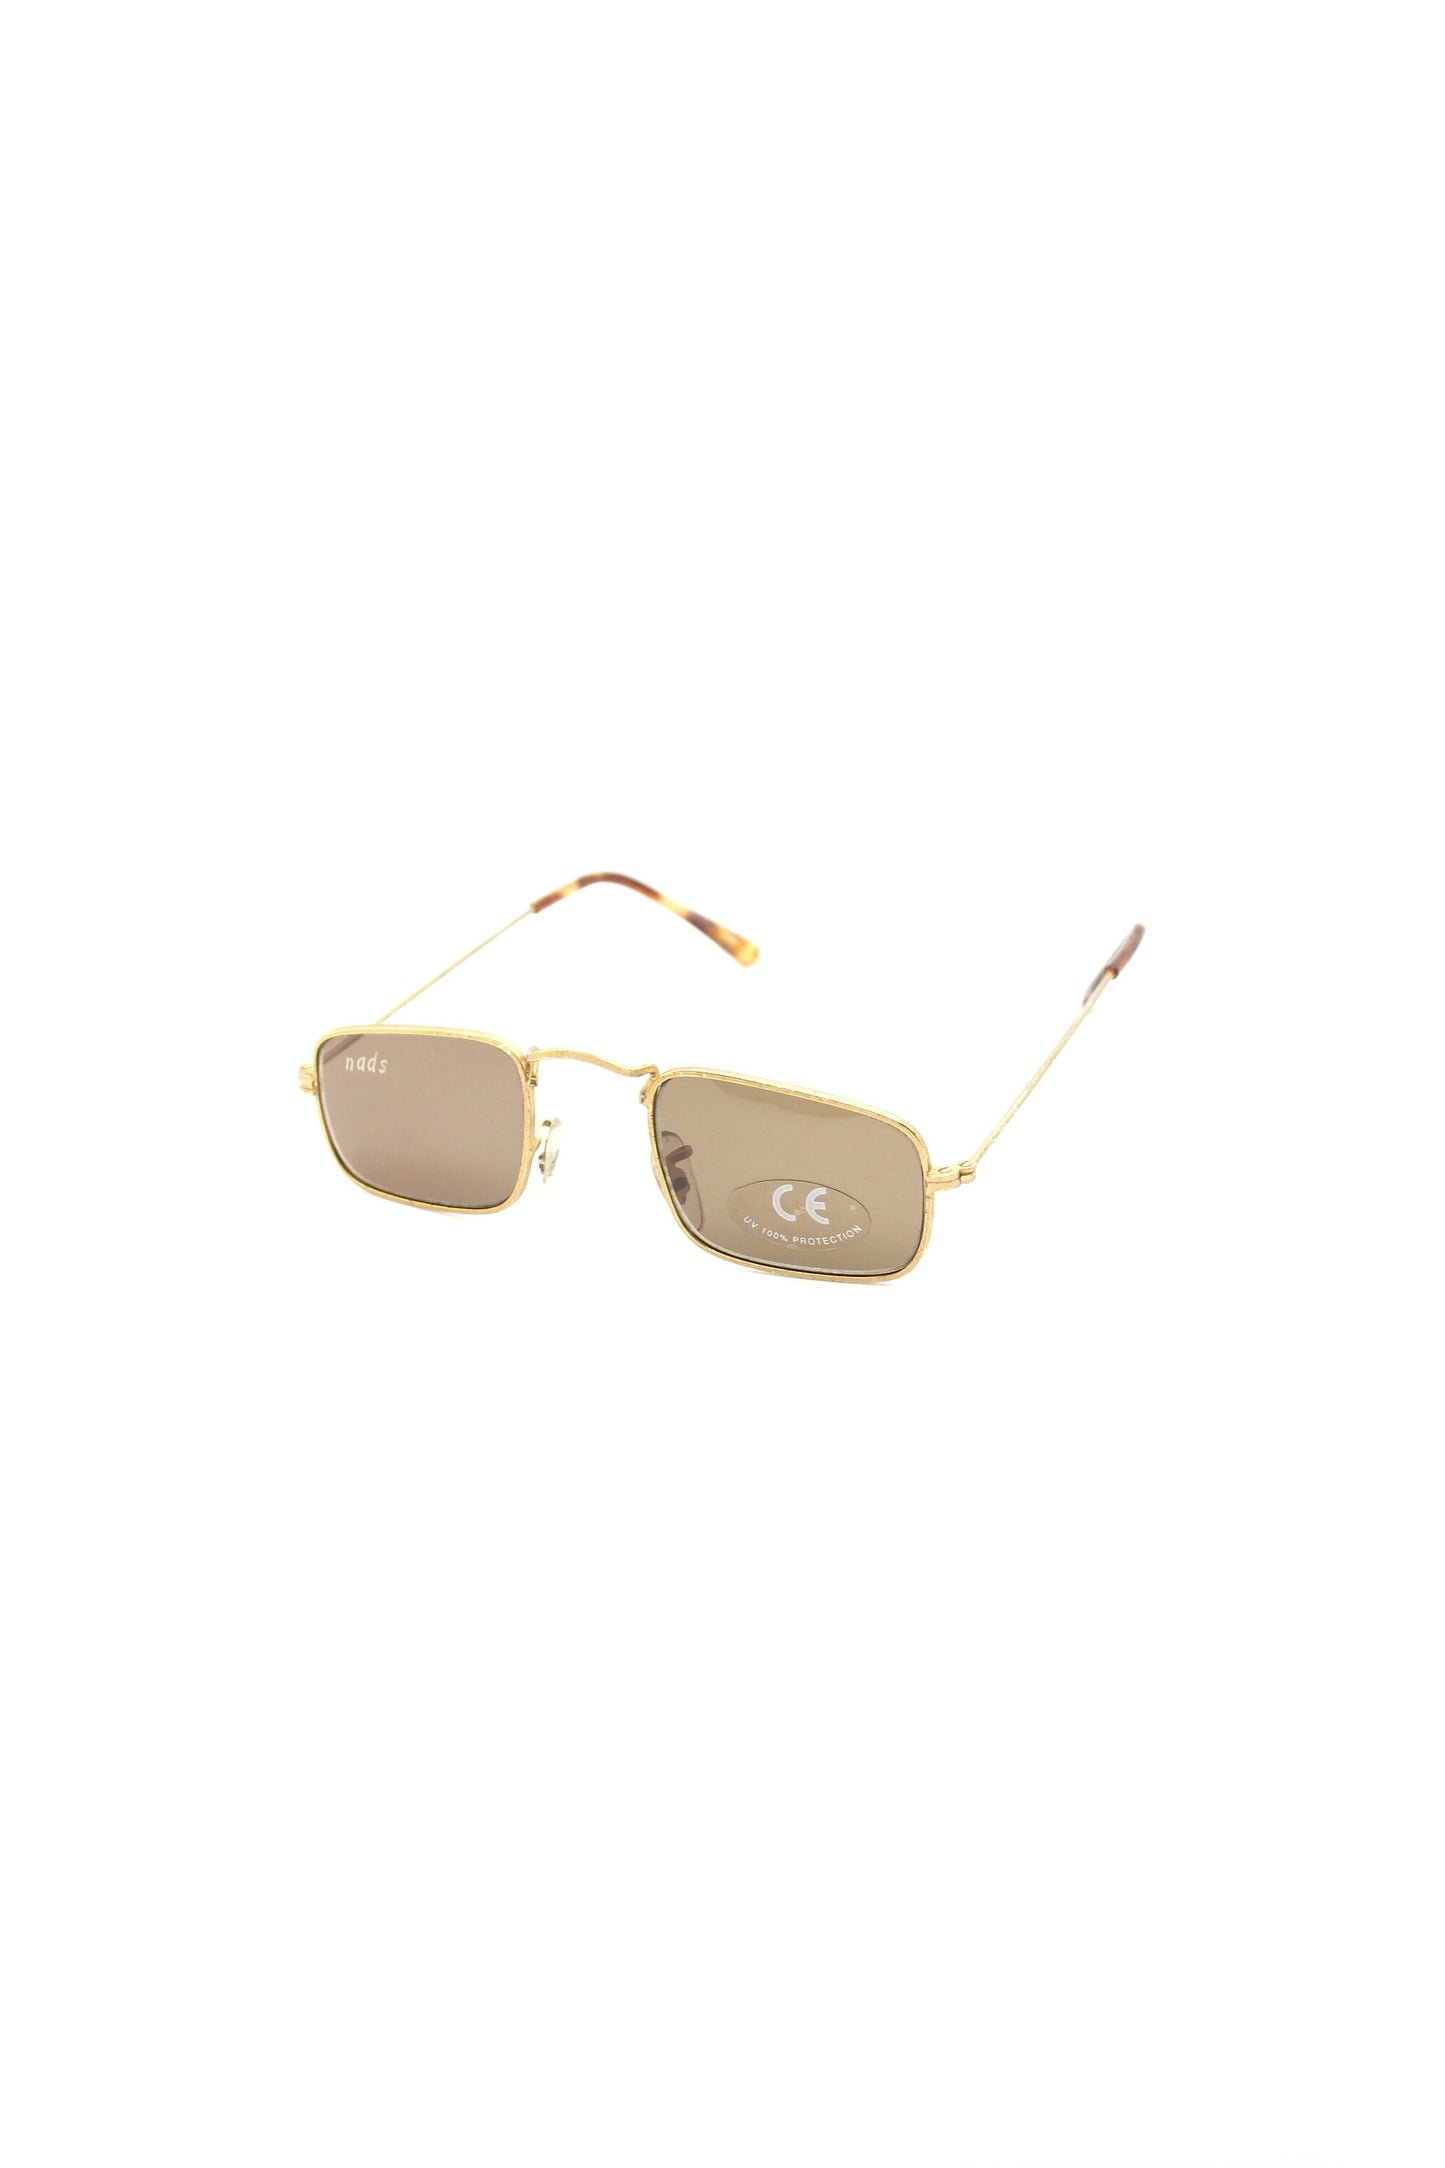 90s minimalistic Vintage New Old Stock sunglasses. Never worn